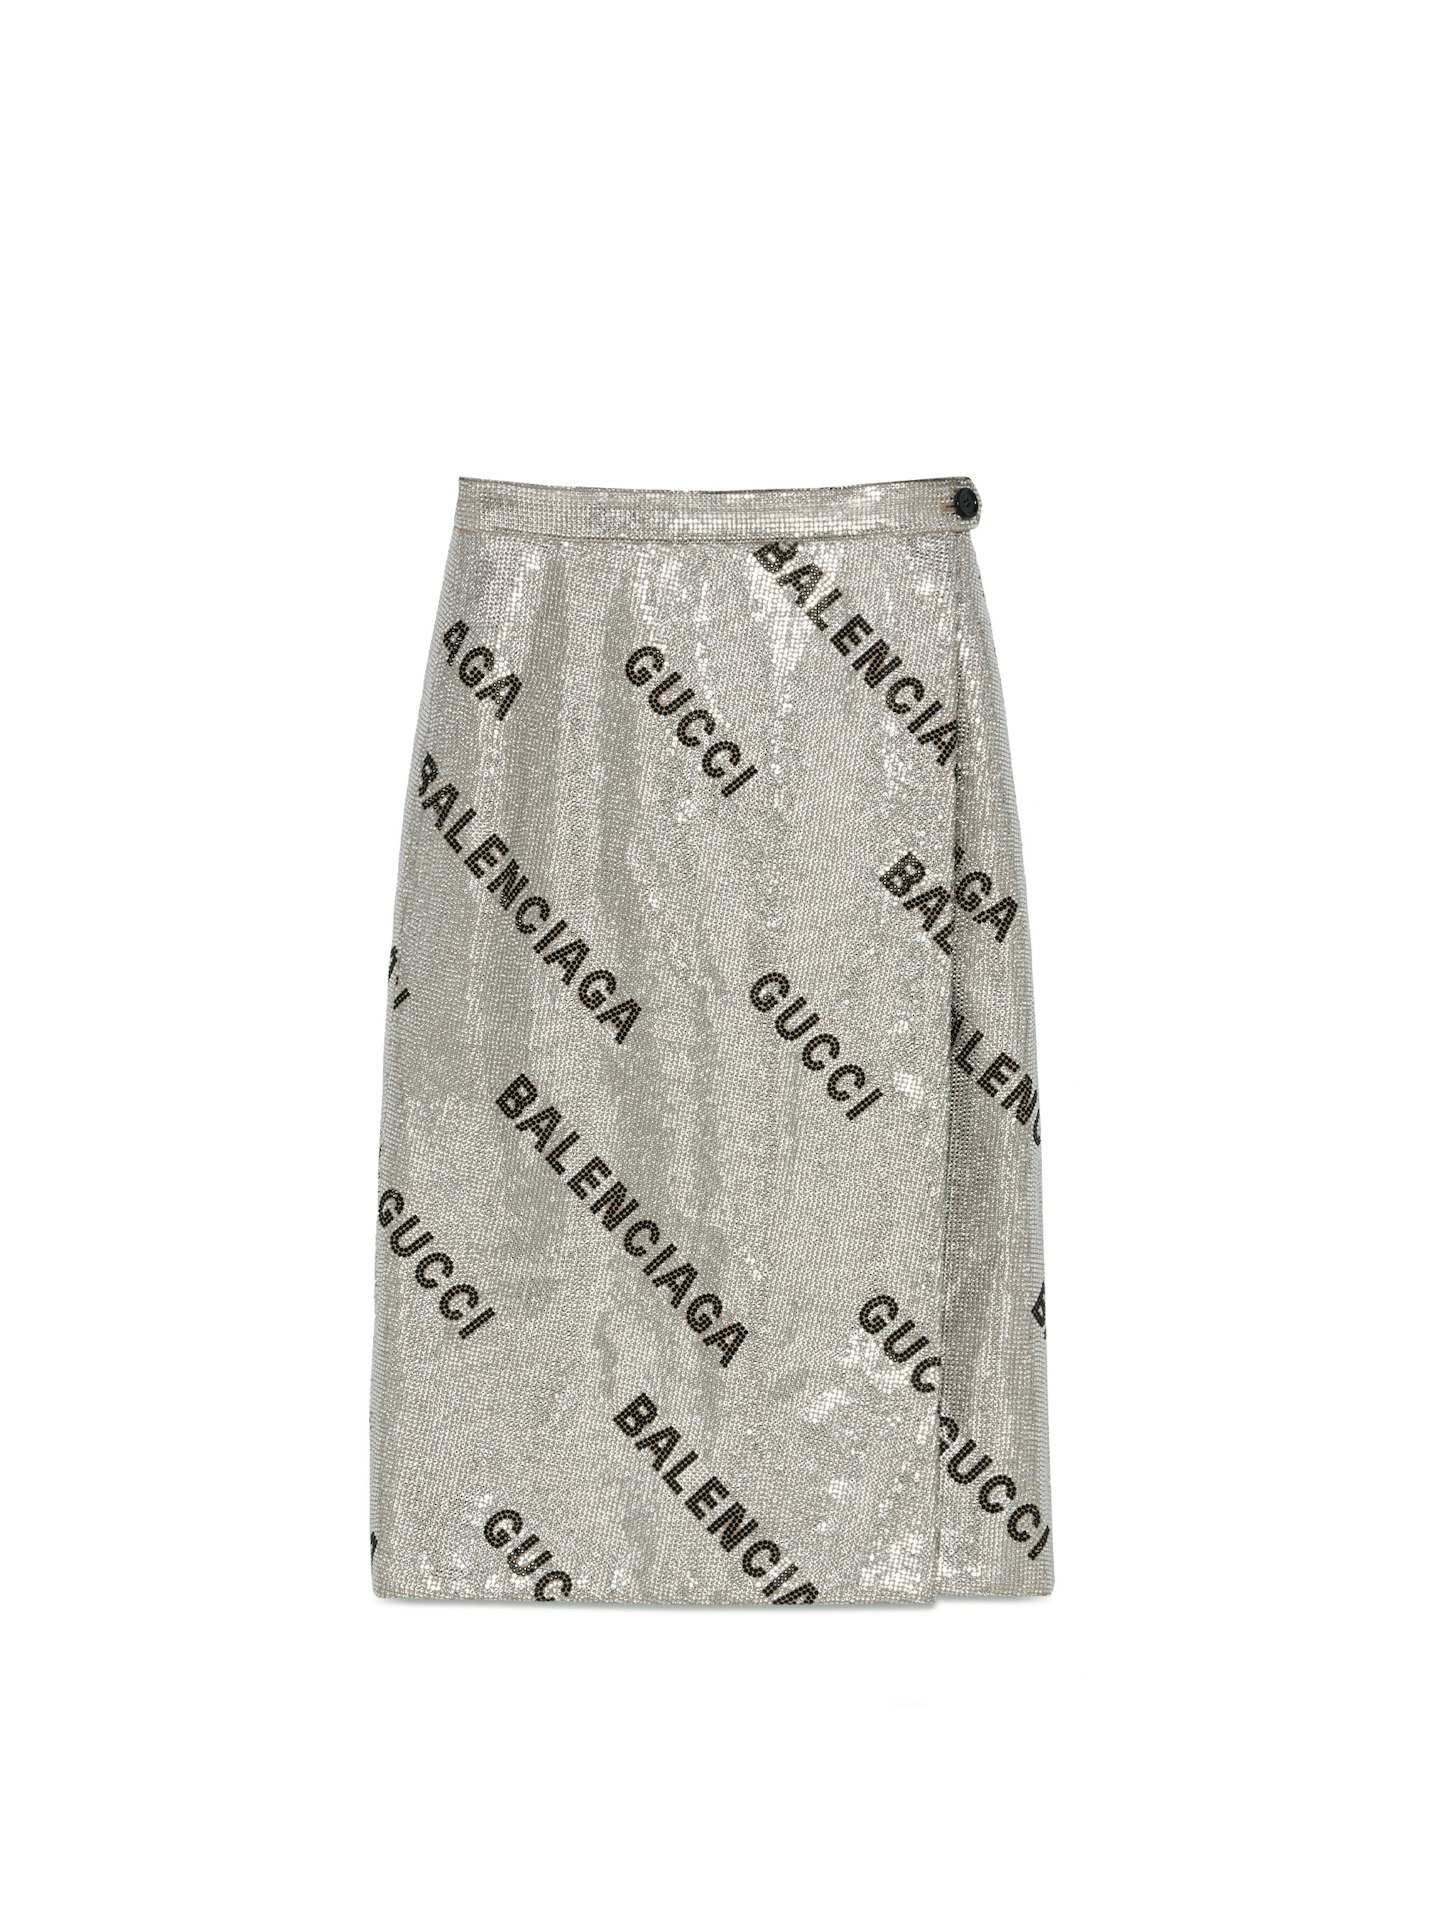 Crystal Skirt, £4,400